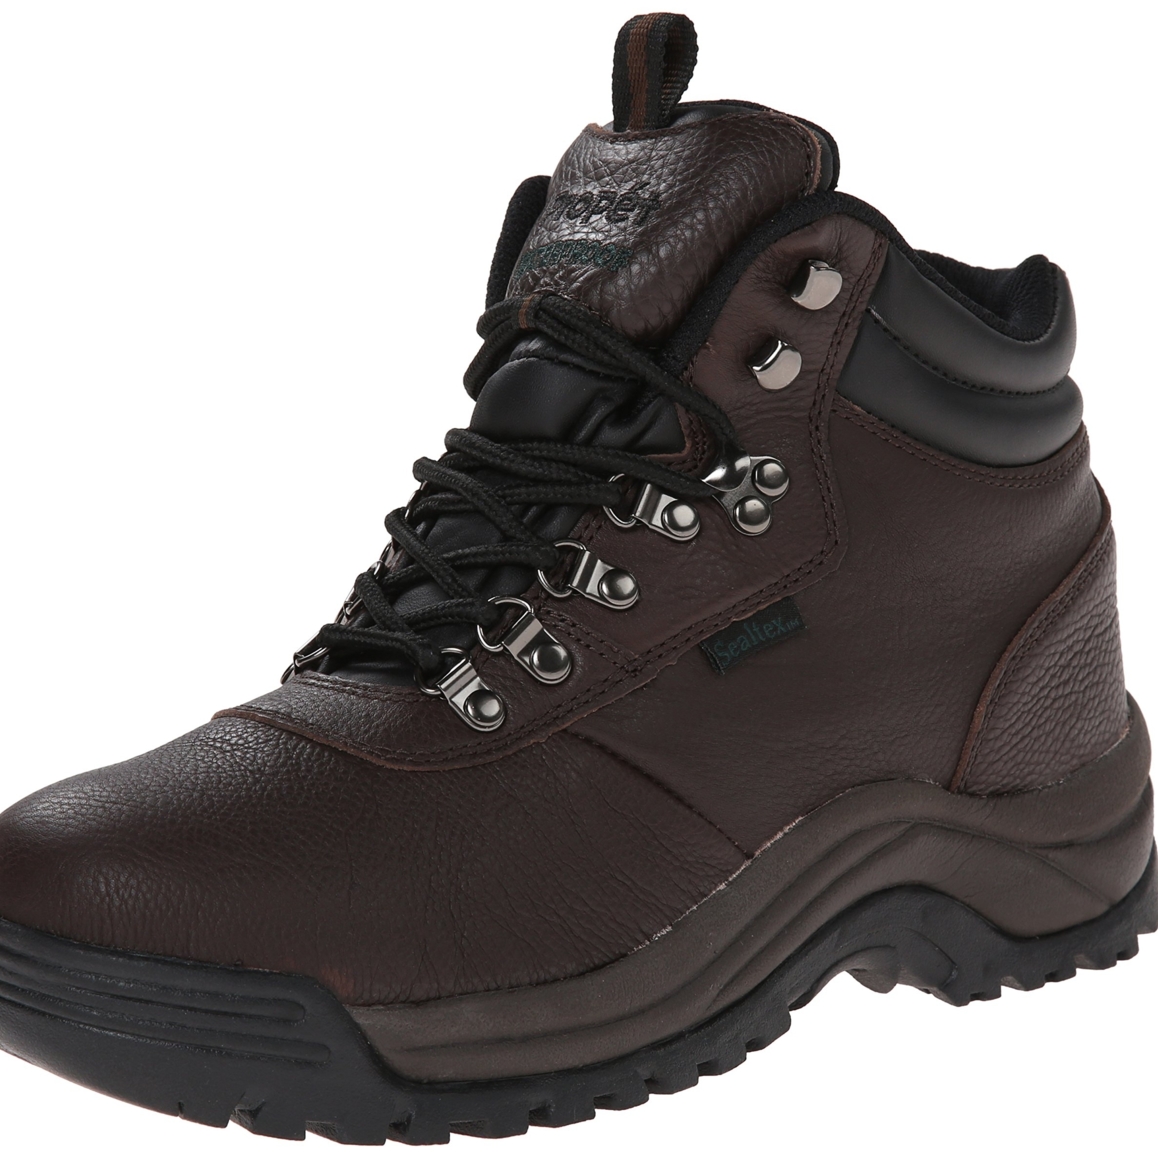 Propet Men's Cliff Walker Hiking Boot Bronco Brown - M3188BRO - BRONCO BROWN, 10-2E